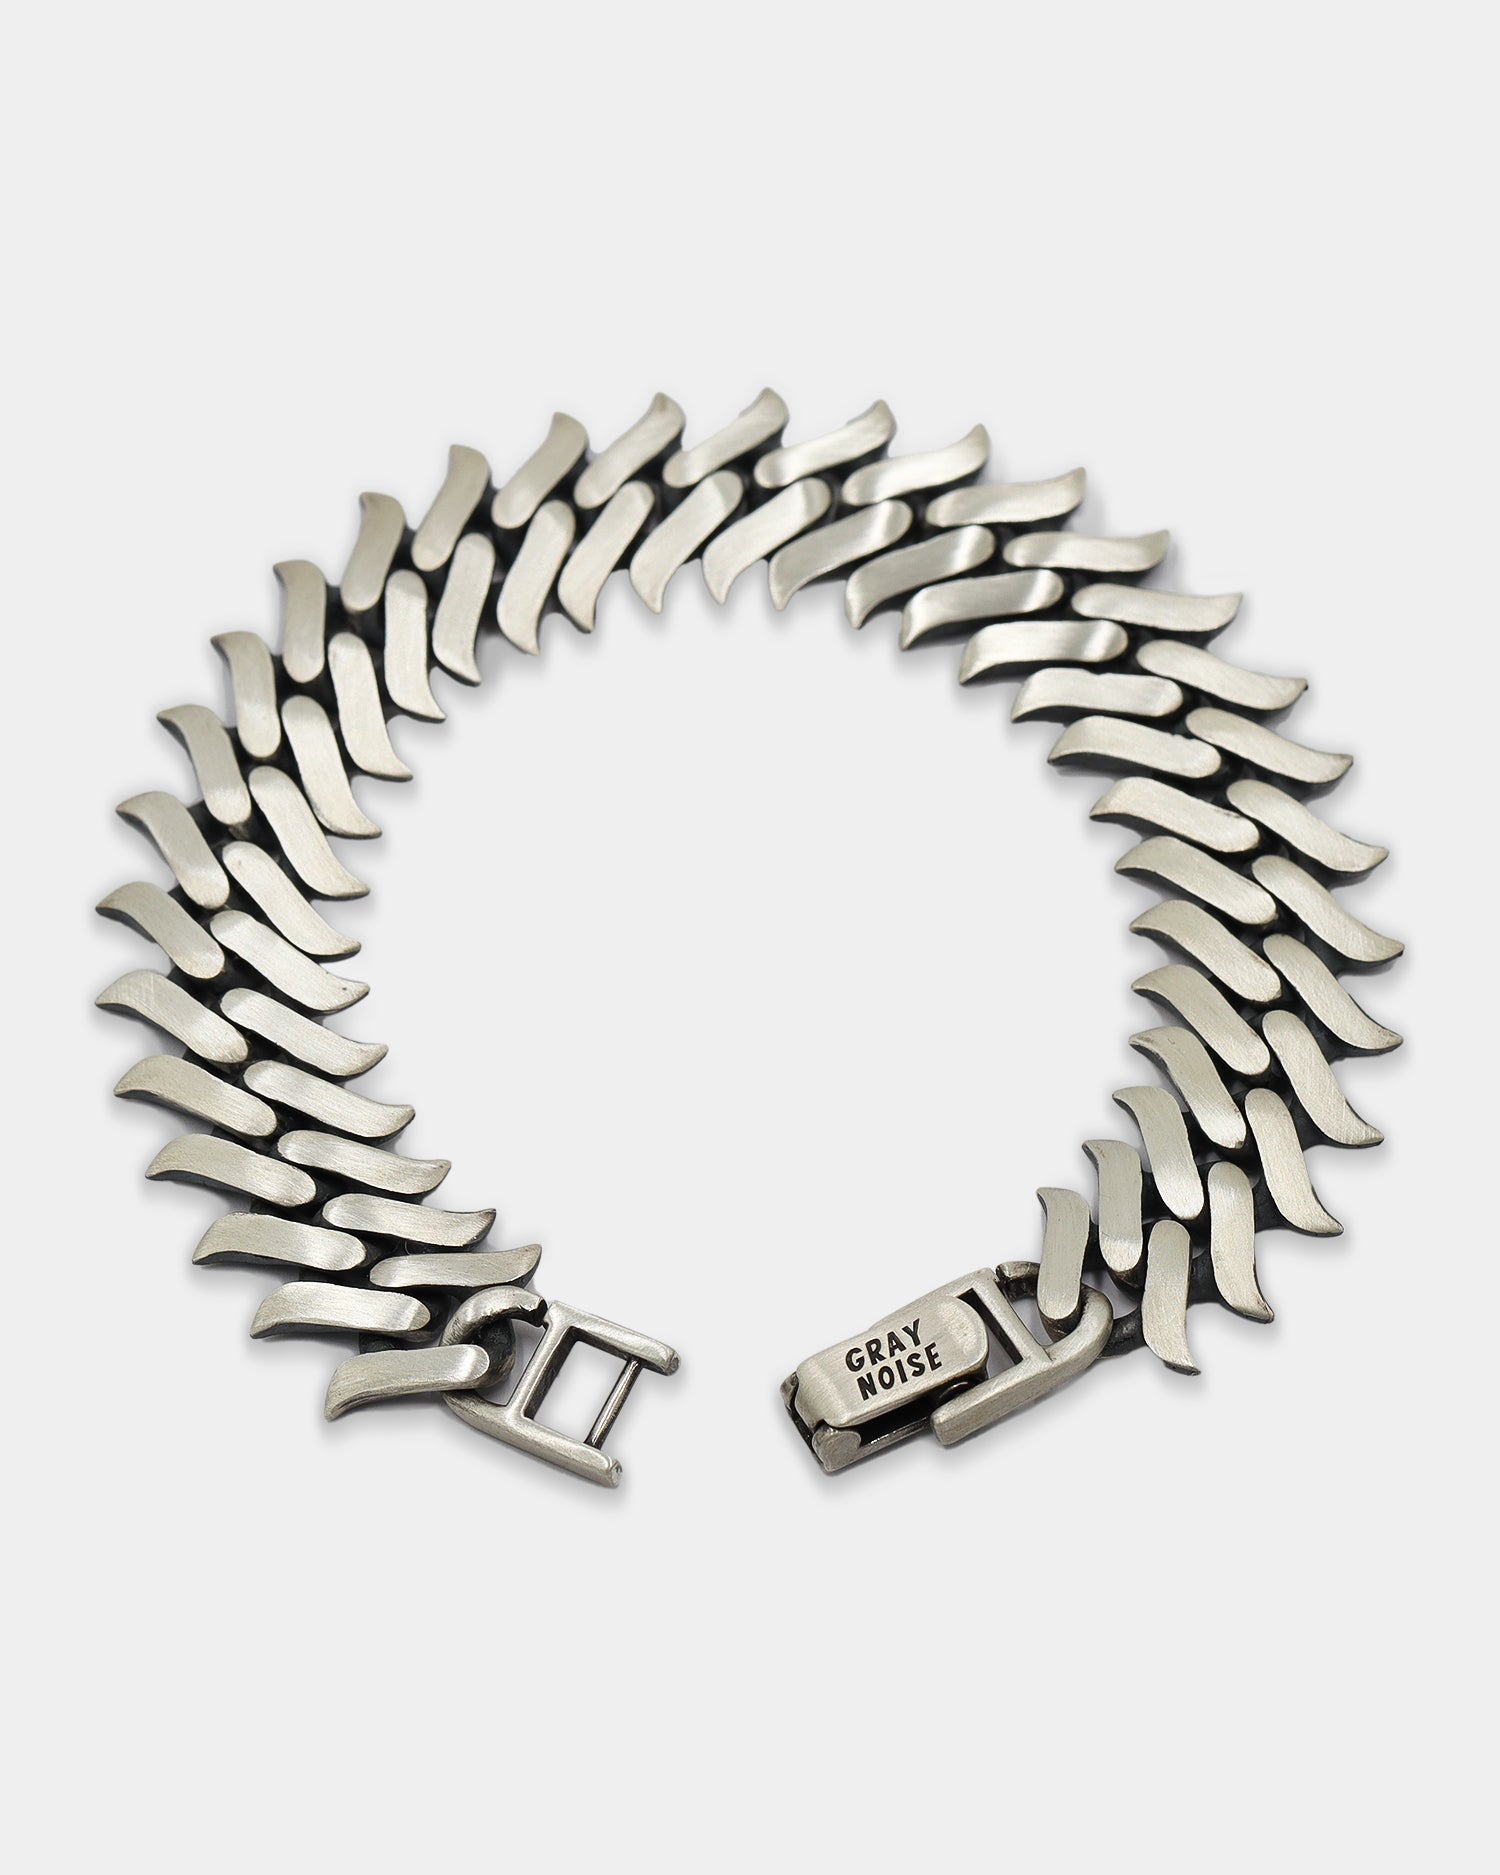 Thorn chain bracelet (925 silver)